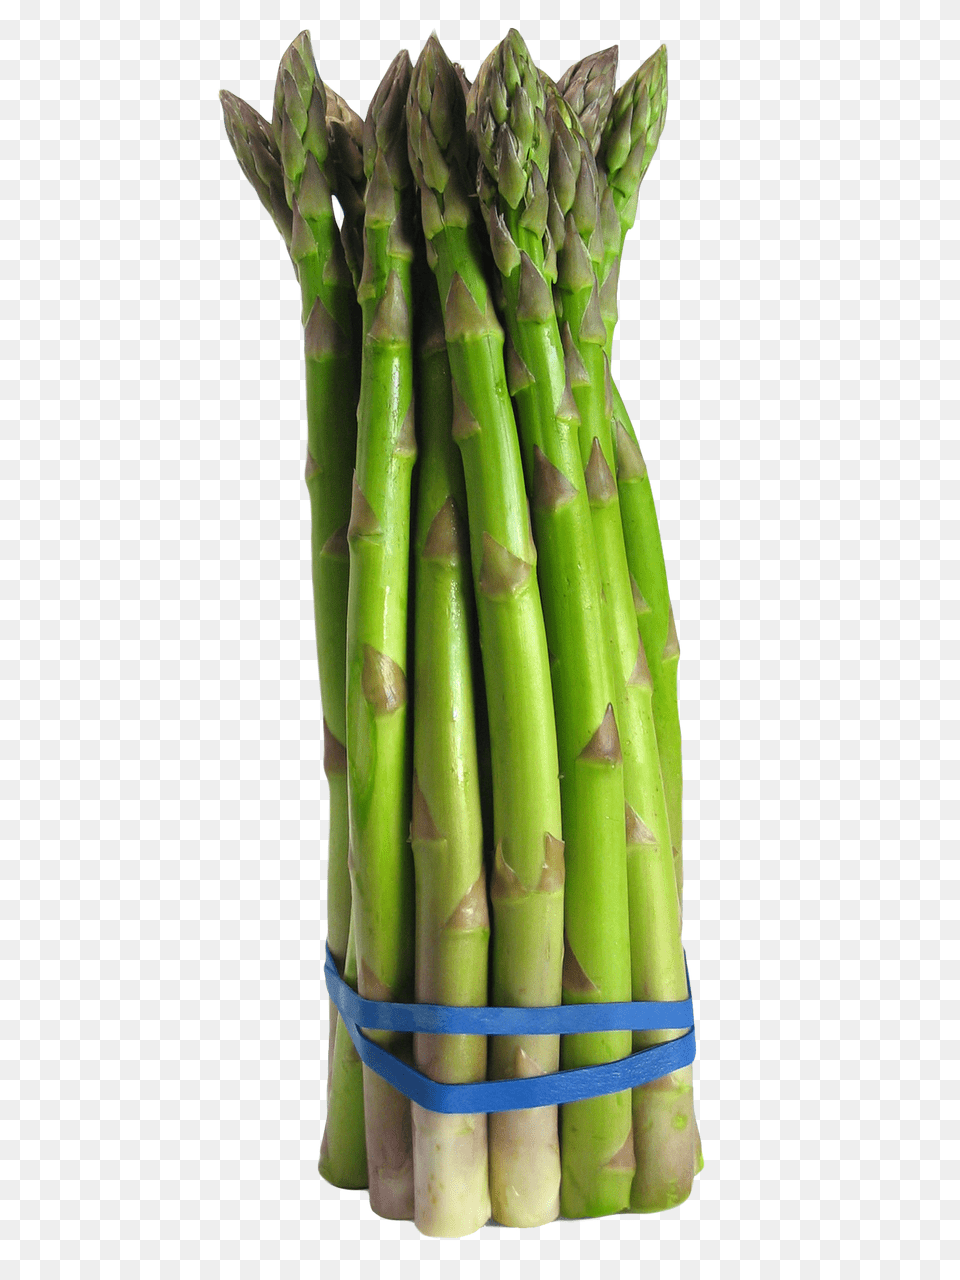 Asparagus Food, Plant, Produce, Vegetable Png Image